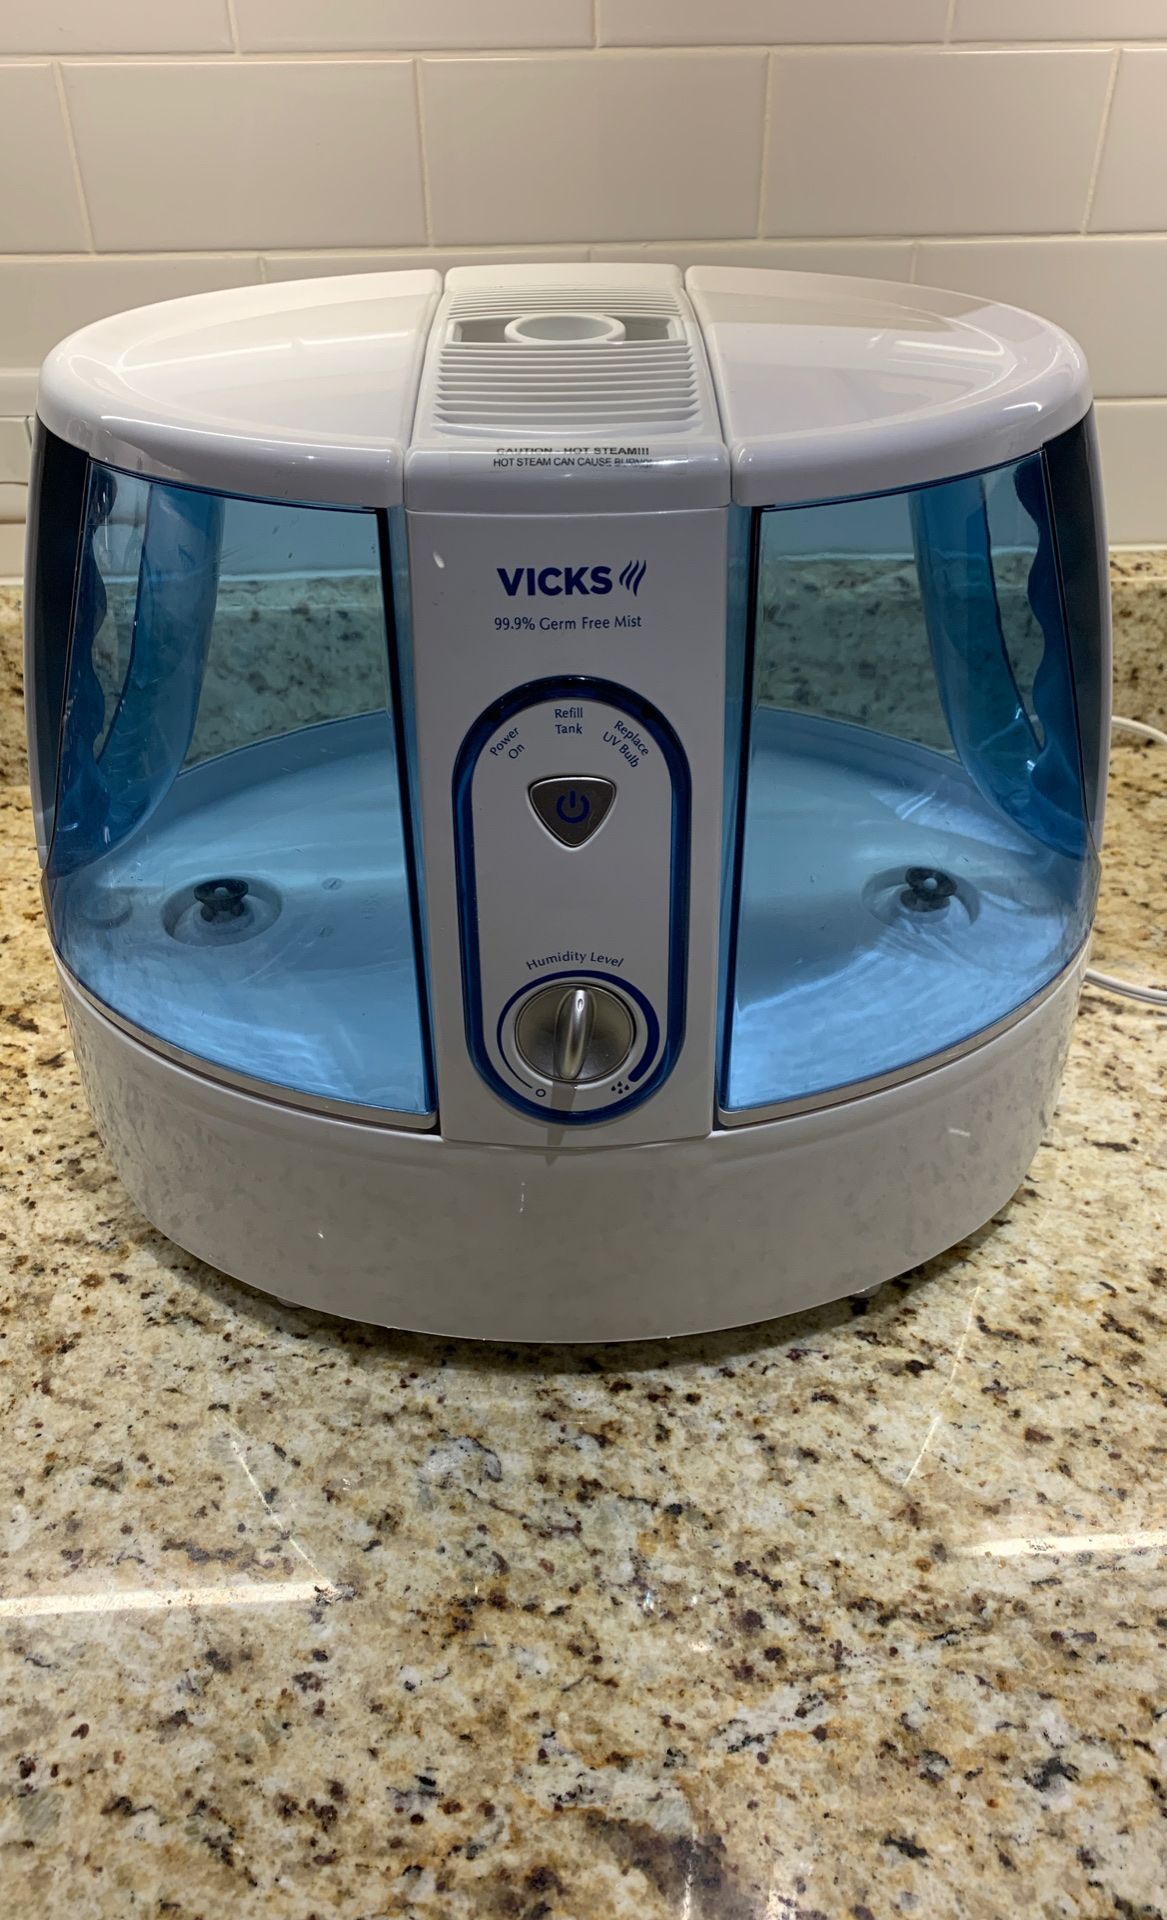 Vick’s germ free humidifier